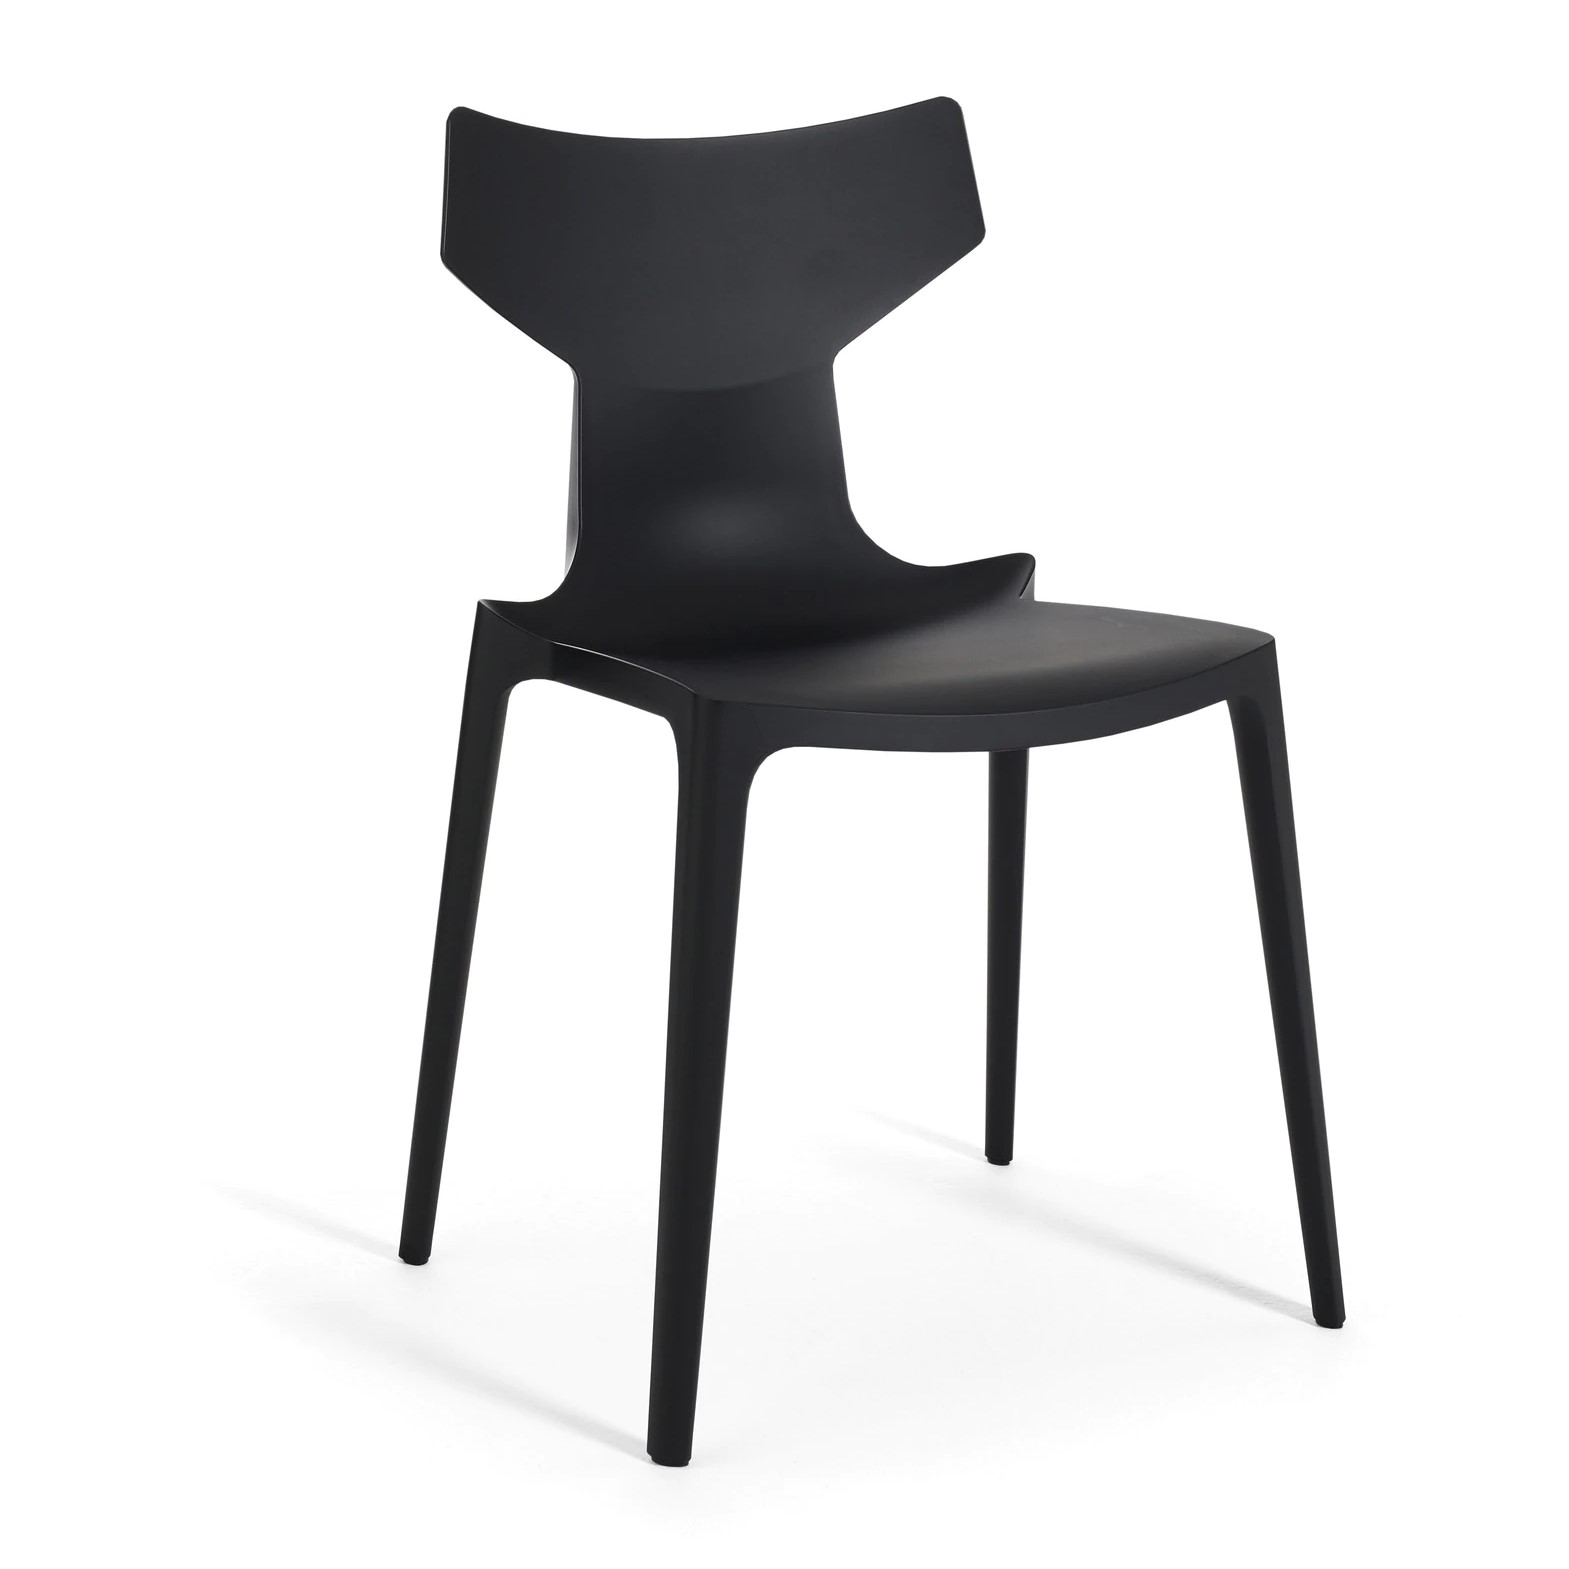 RE-CHAIR καρέκλα - συσκευασία 2 τεμαχίων Image 1